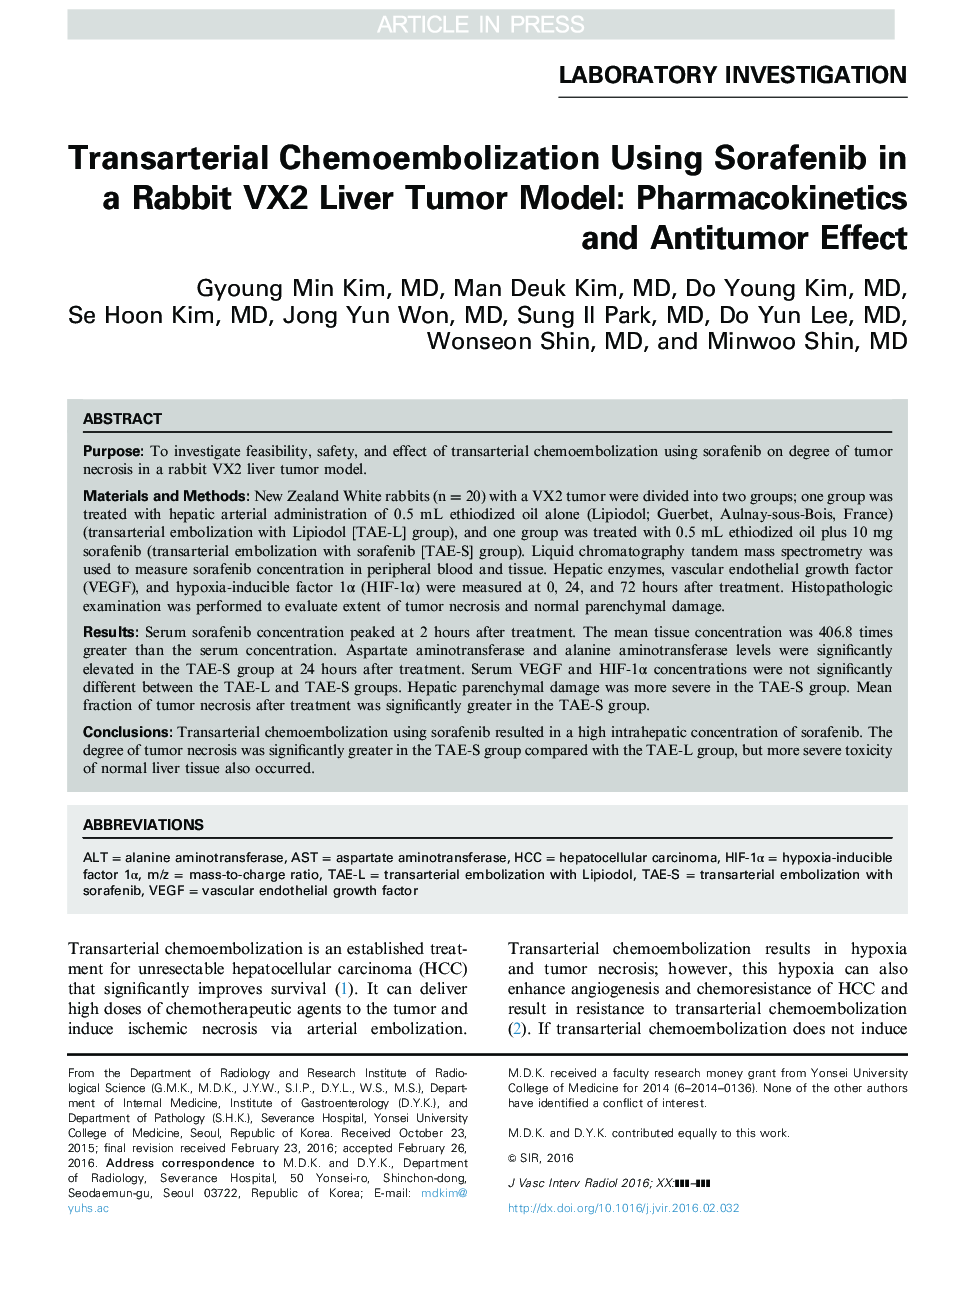 Transarterial Chemoembolization Using Sorafenib in a Rabbit VX2 Liver Tumor Model: Pharmacokinetics and Antitumor Effect